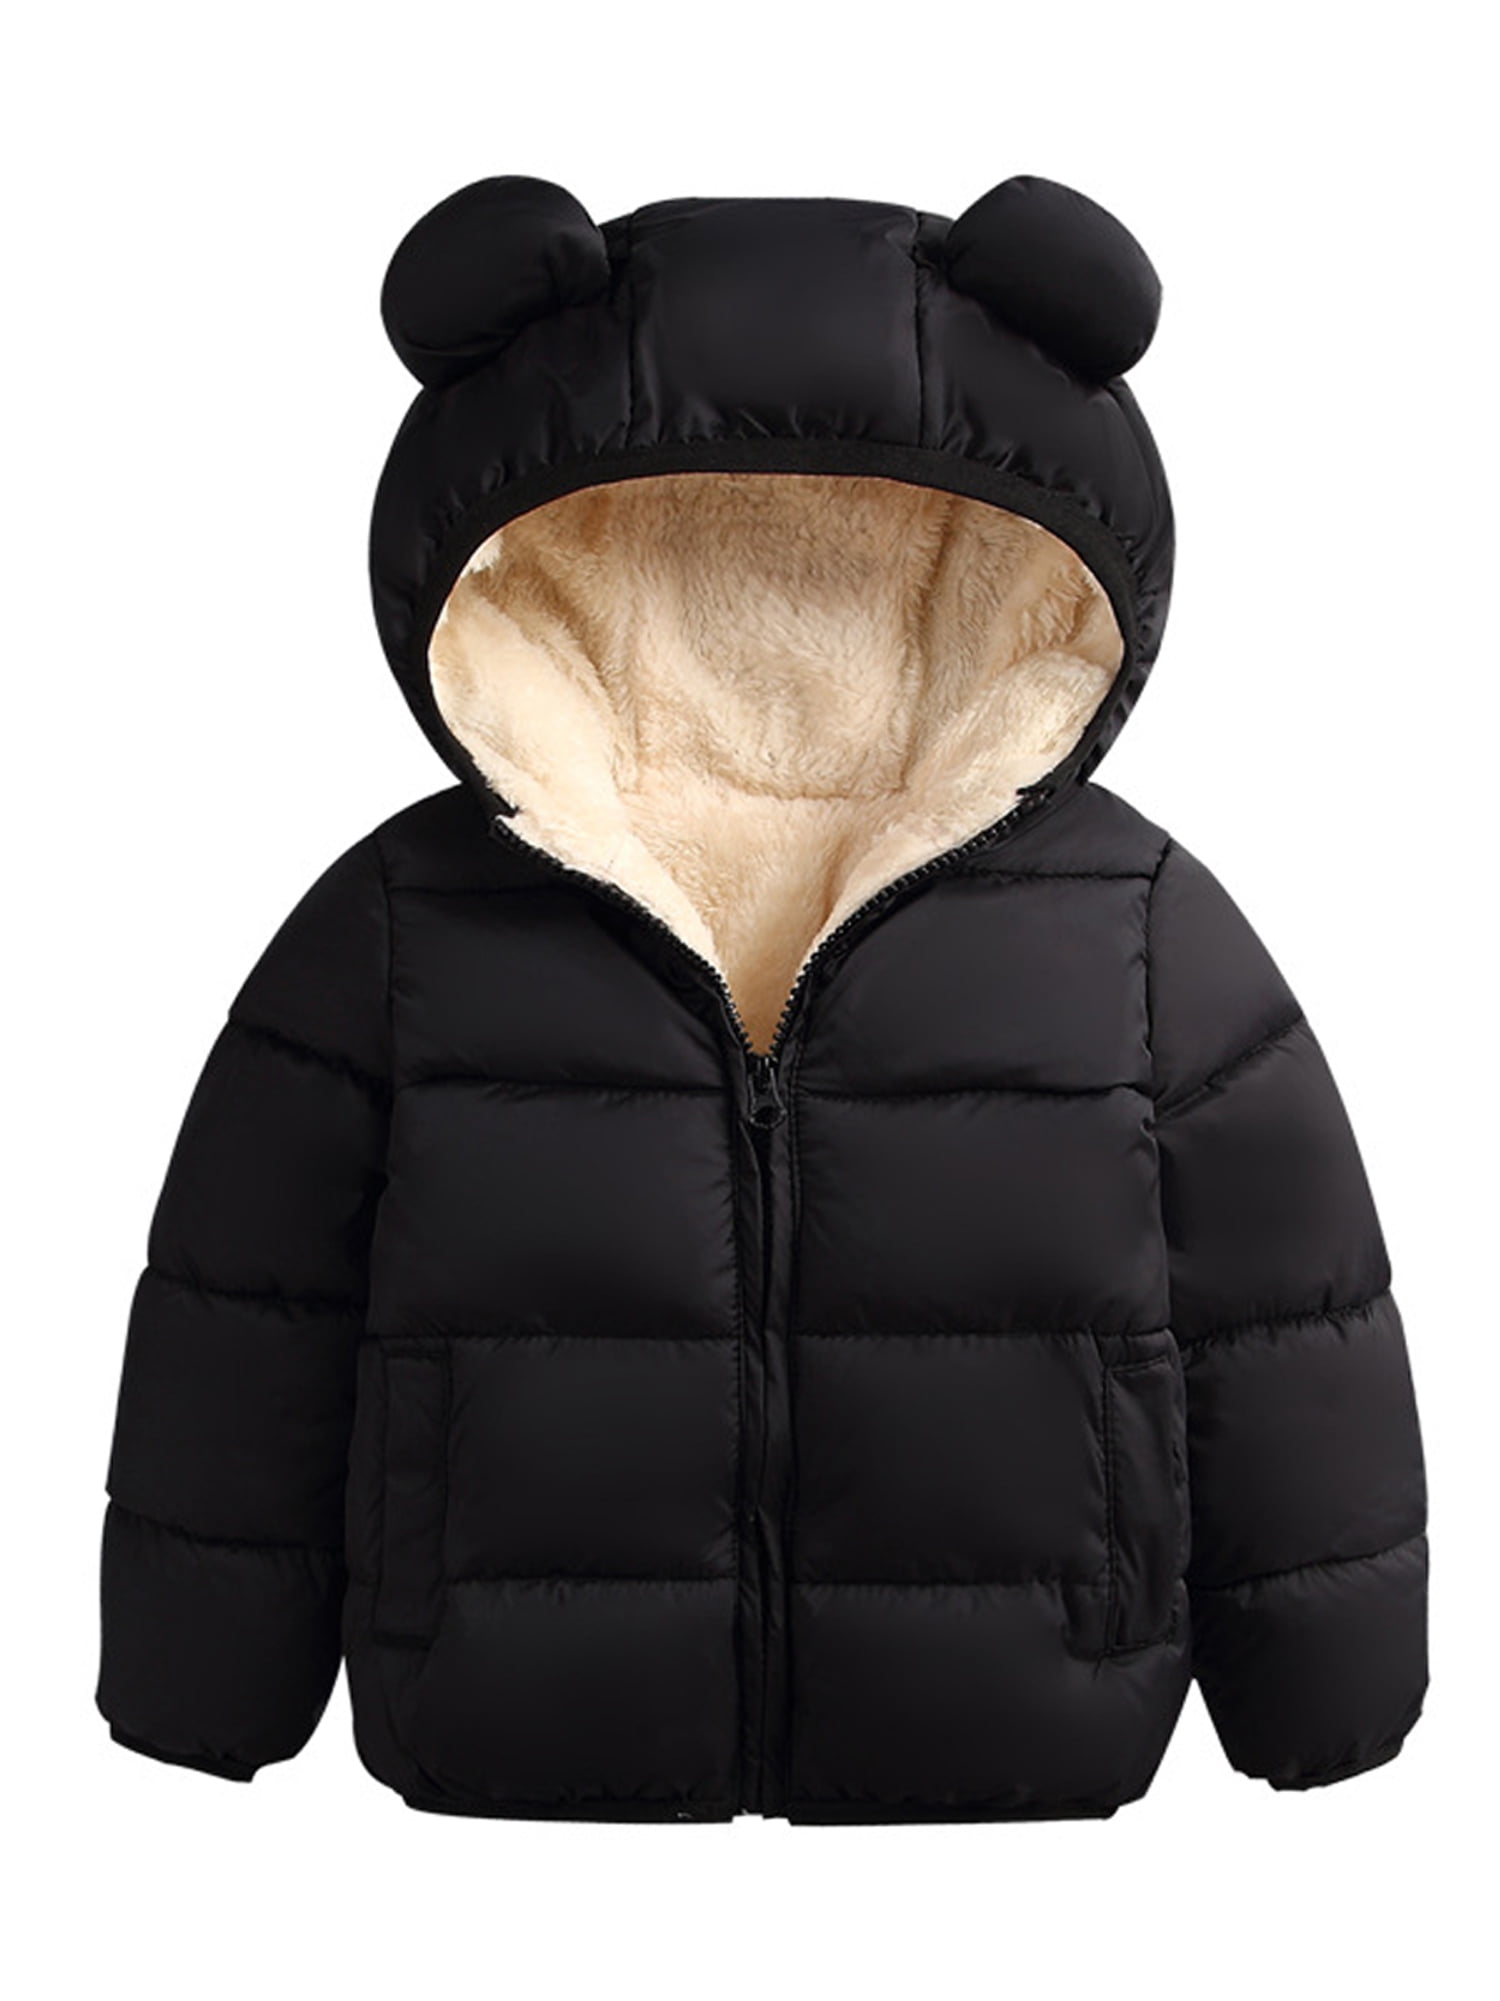 Lifestyler Fashion Girl Cartoon Ear Hooded Pullover Casual Winter Warm Clothes Coat Zipper Regular Jacket